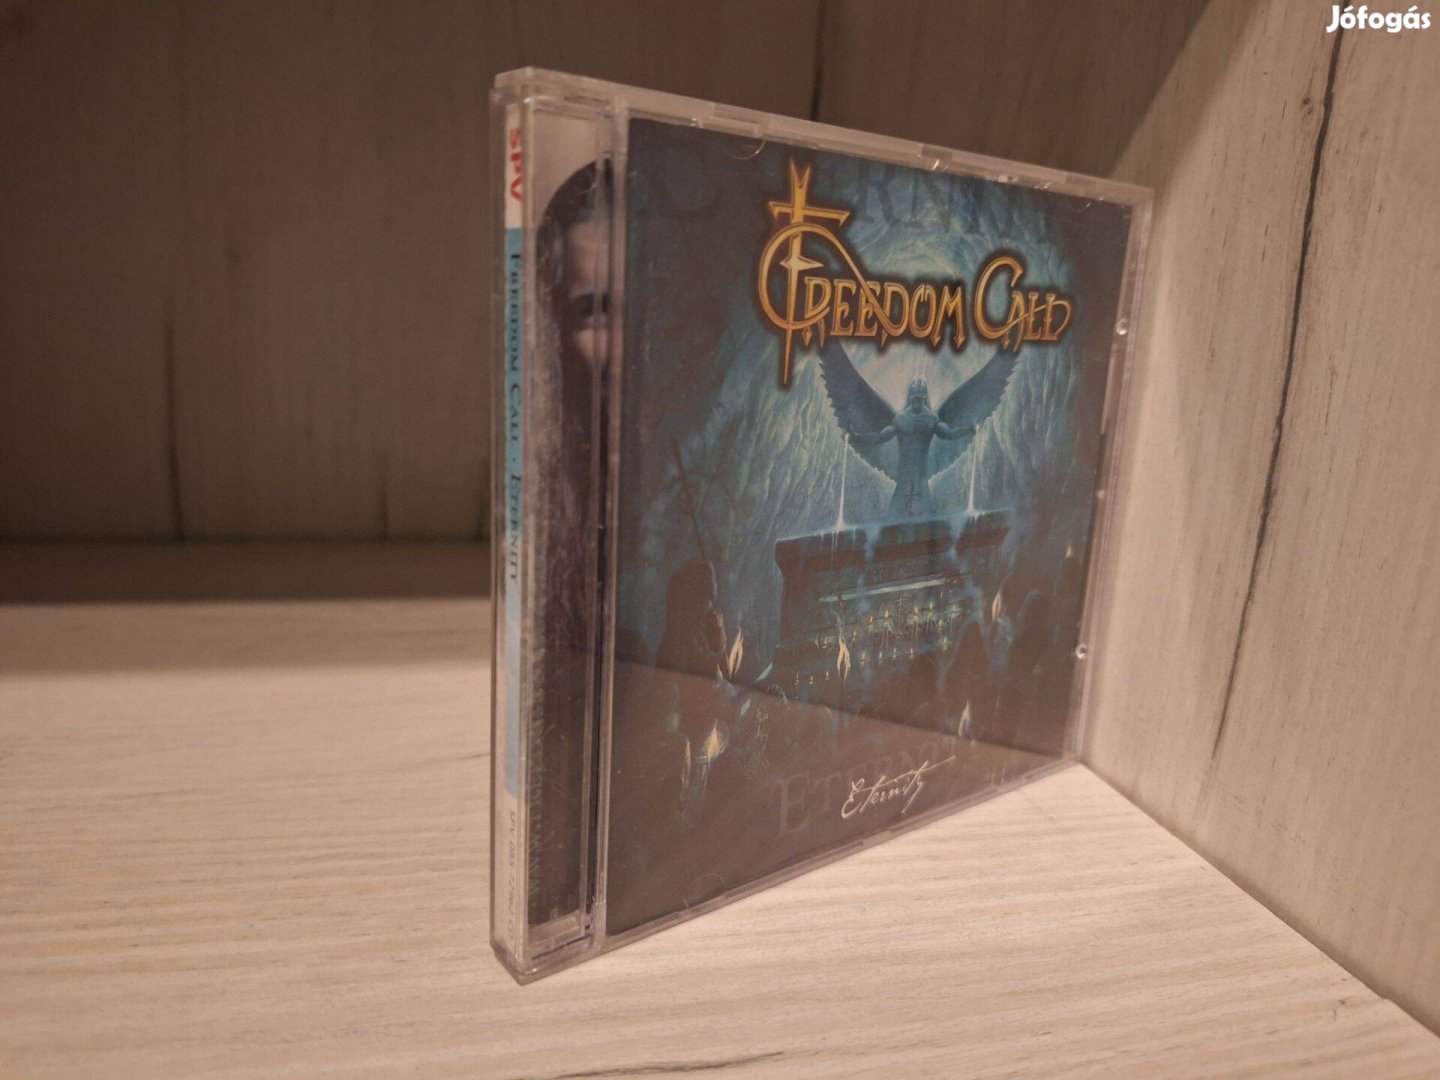 Freedom Call - Eternity CD